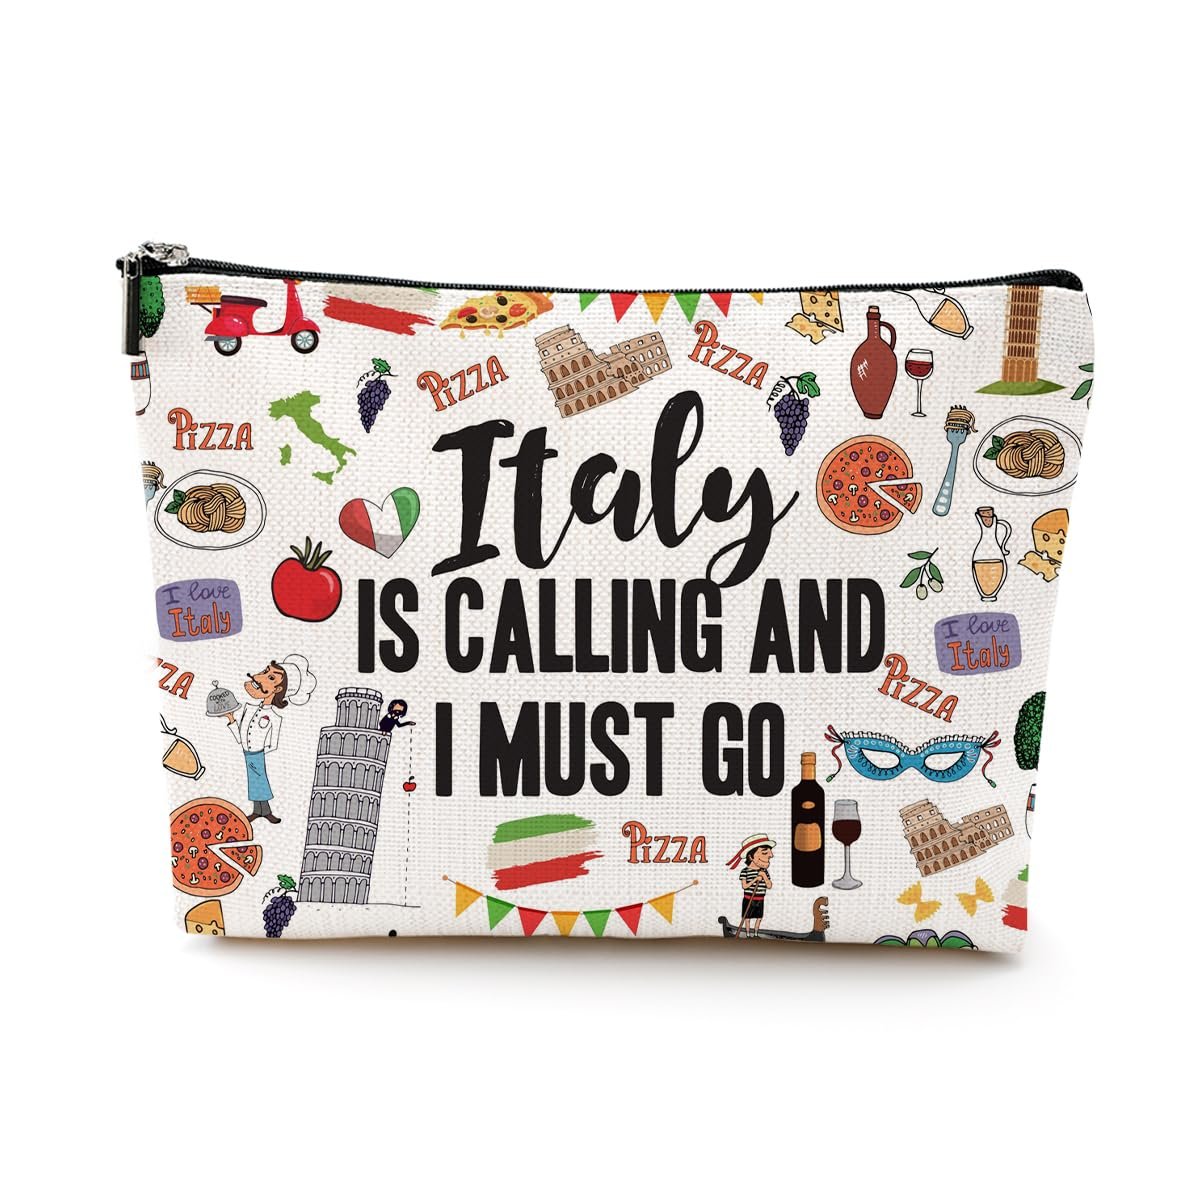 Italian Themed Cosmetic Bag